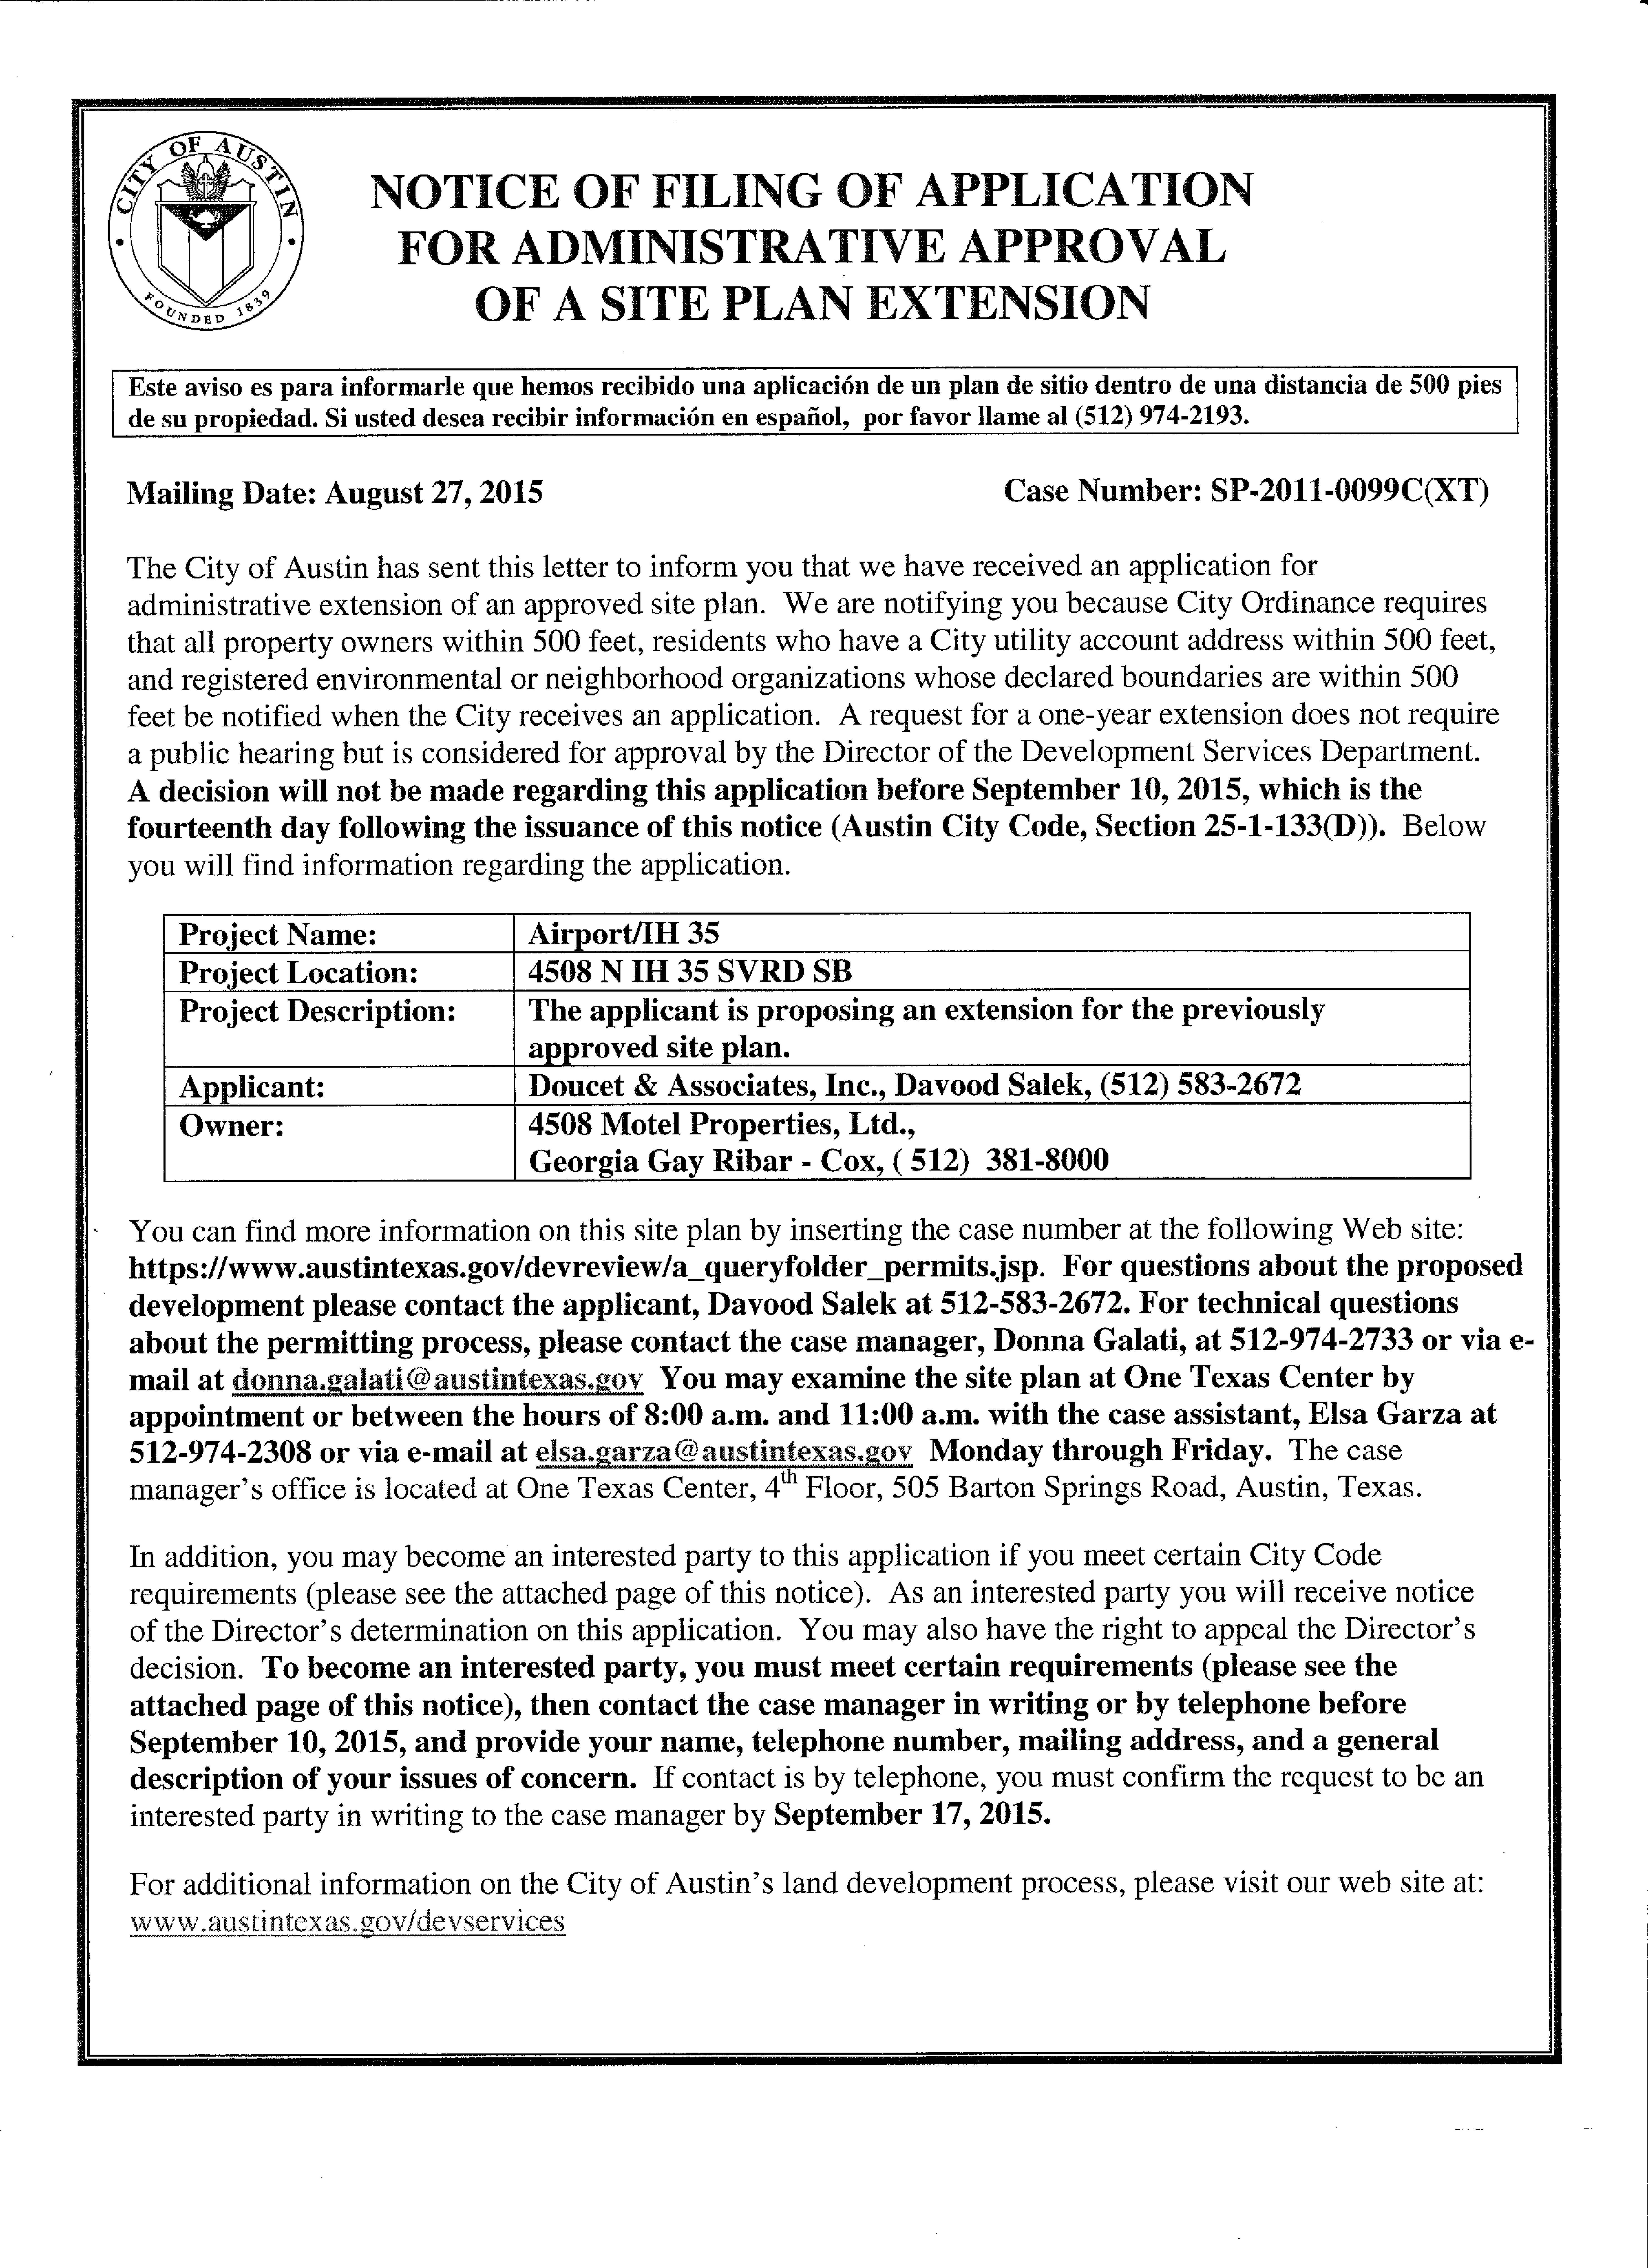 [SP-2011-0099C(XT)] Site Plan Extension Notice for 4508 N IH 35 SVRD SB